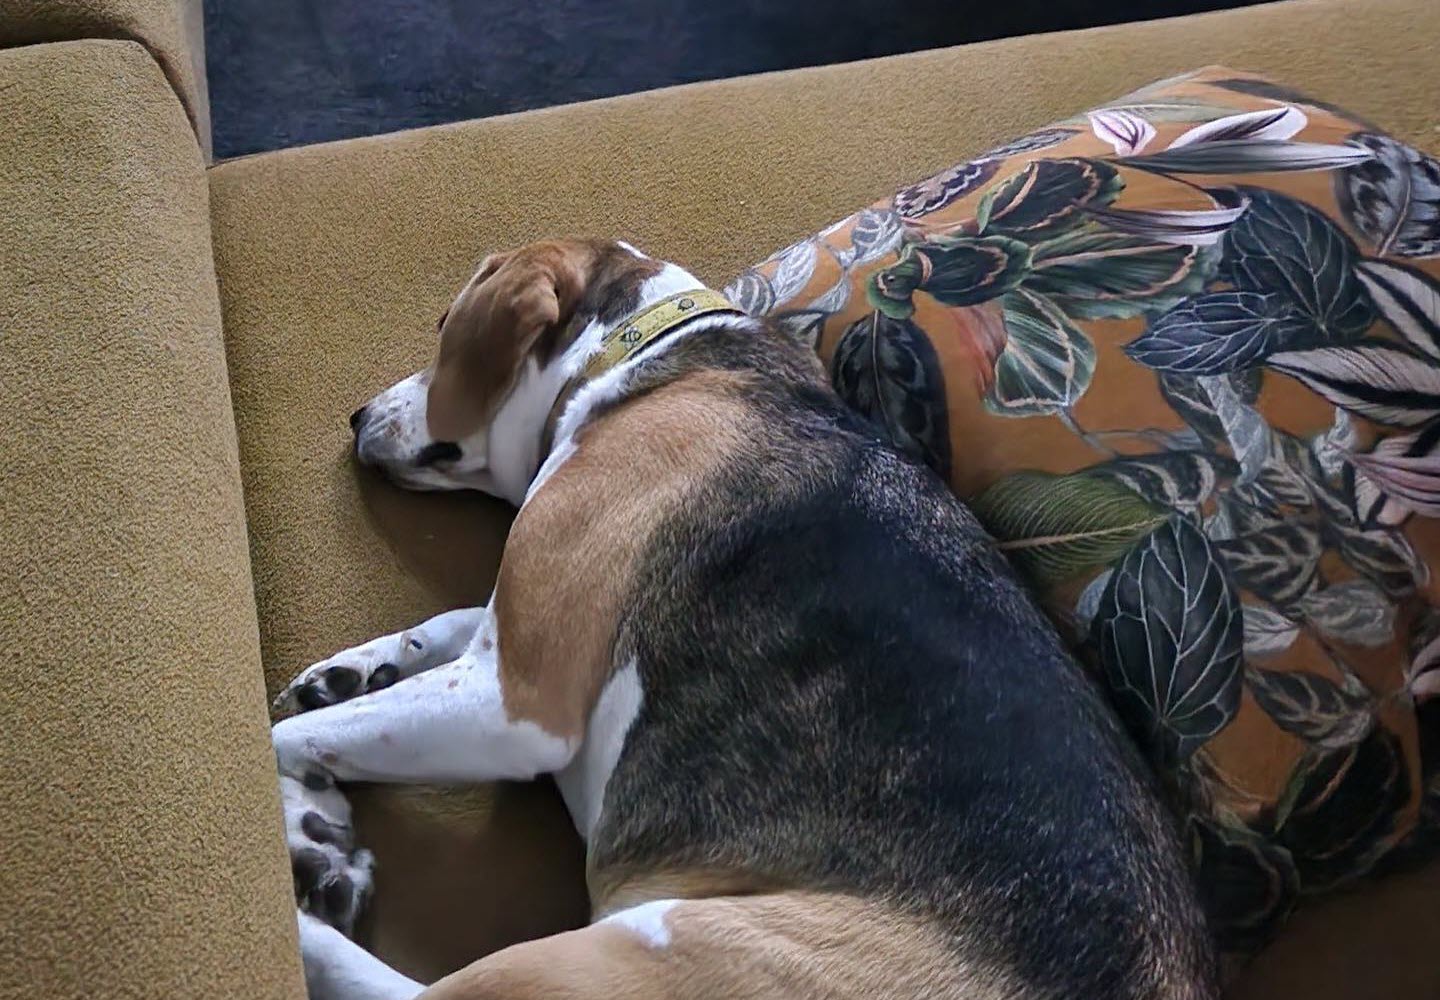 Dog lying down, enjoying the new custom made couch cushions.